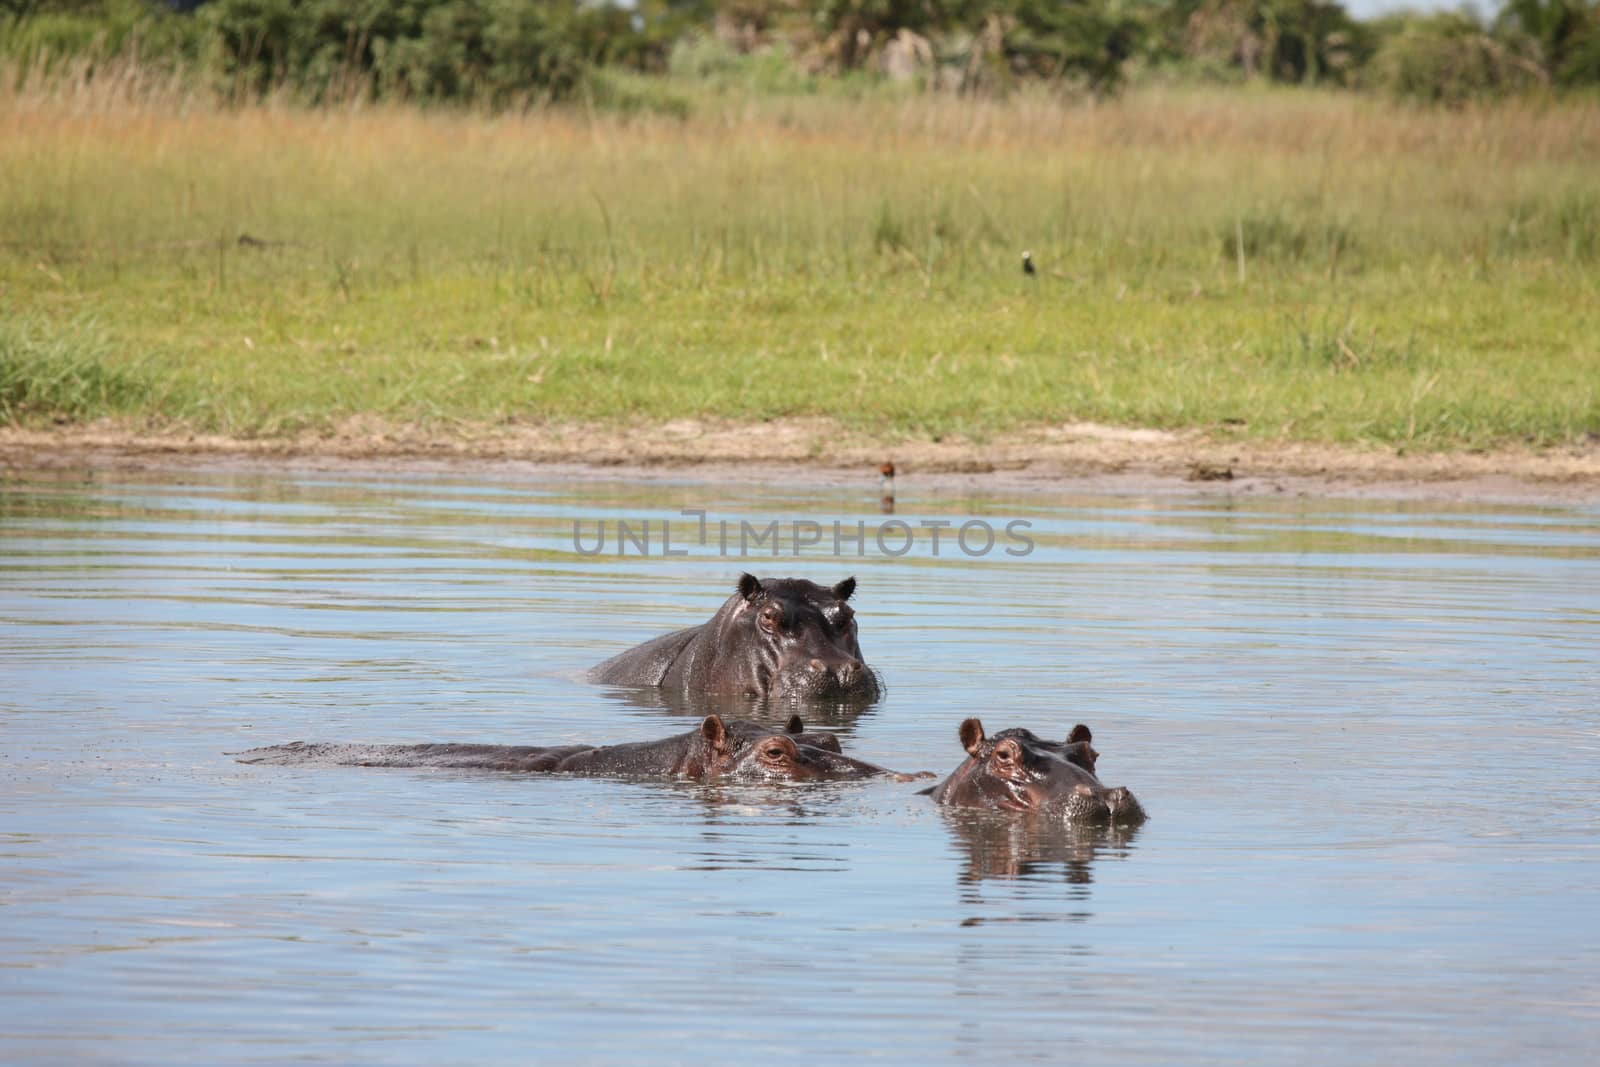 Wild Hippo in African river water hippopotamus (Hippopotamus amphibius)